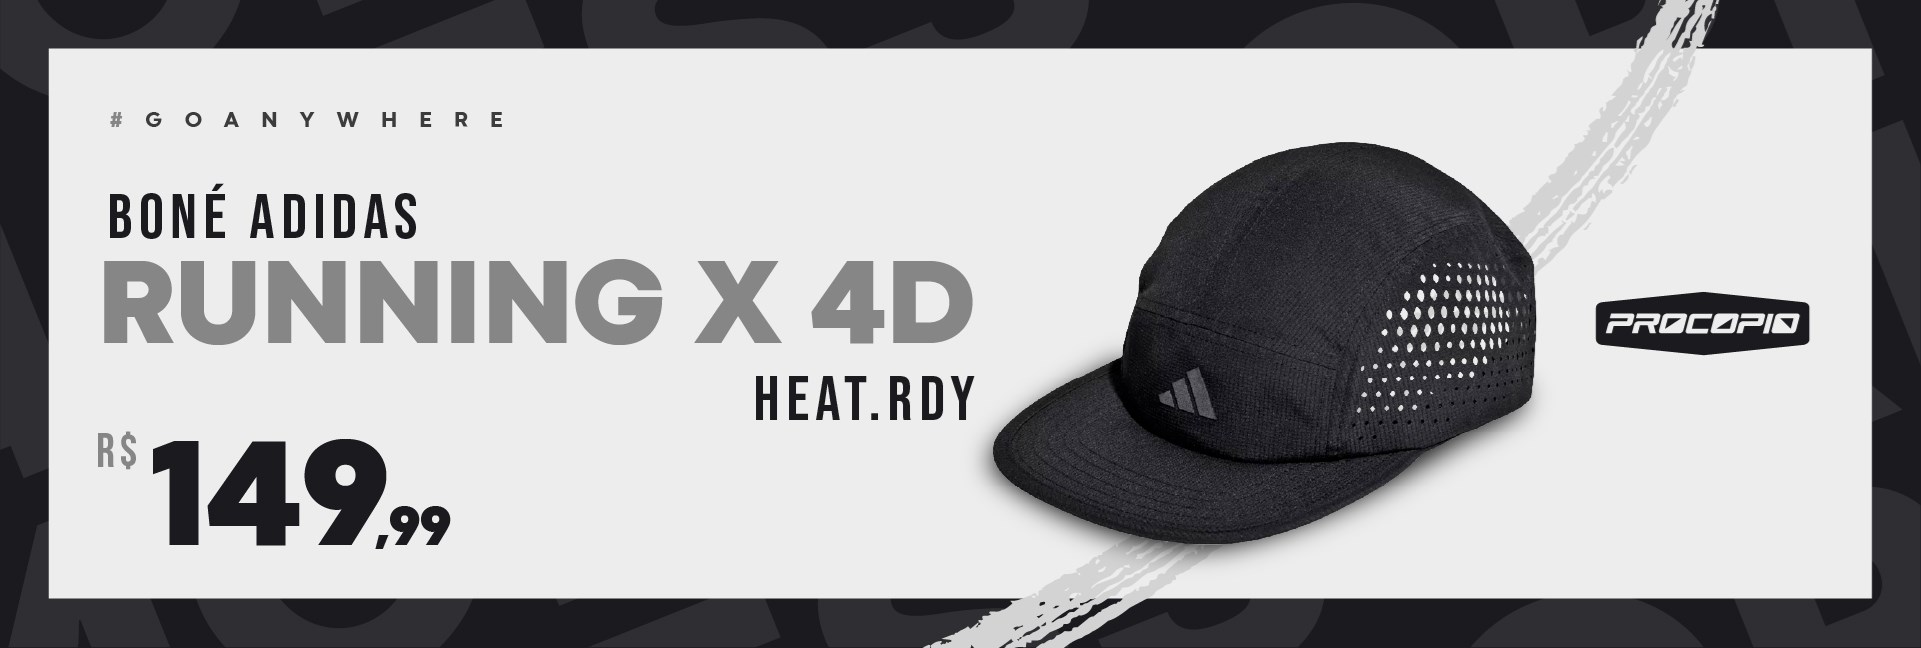 Boné adidas Running X 4D Heat.Rdy